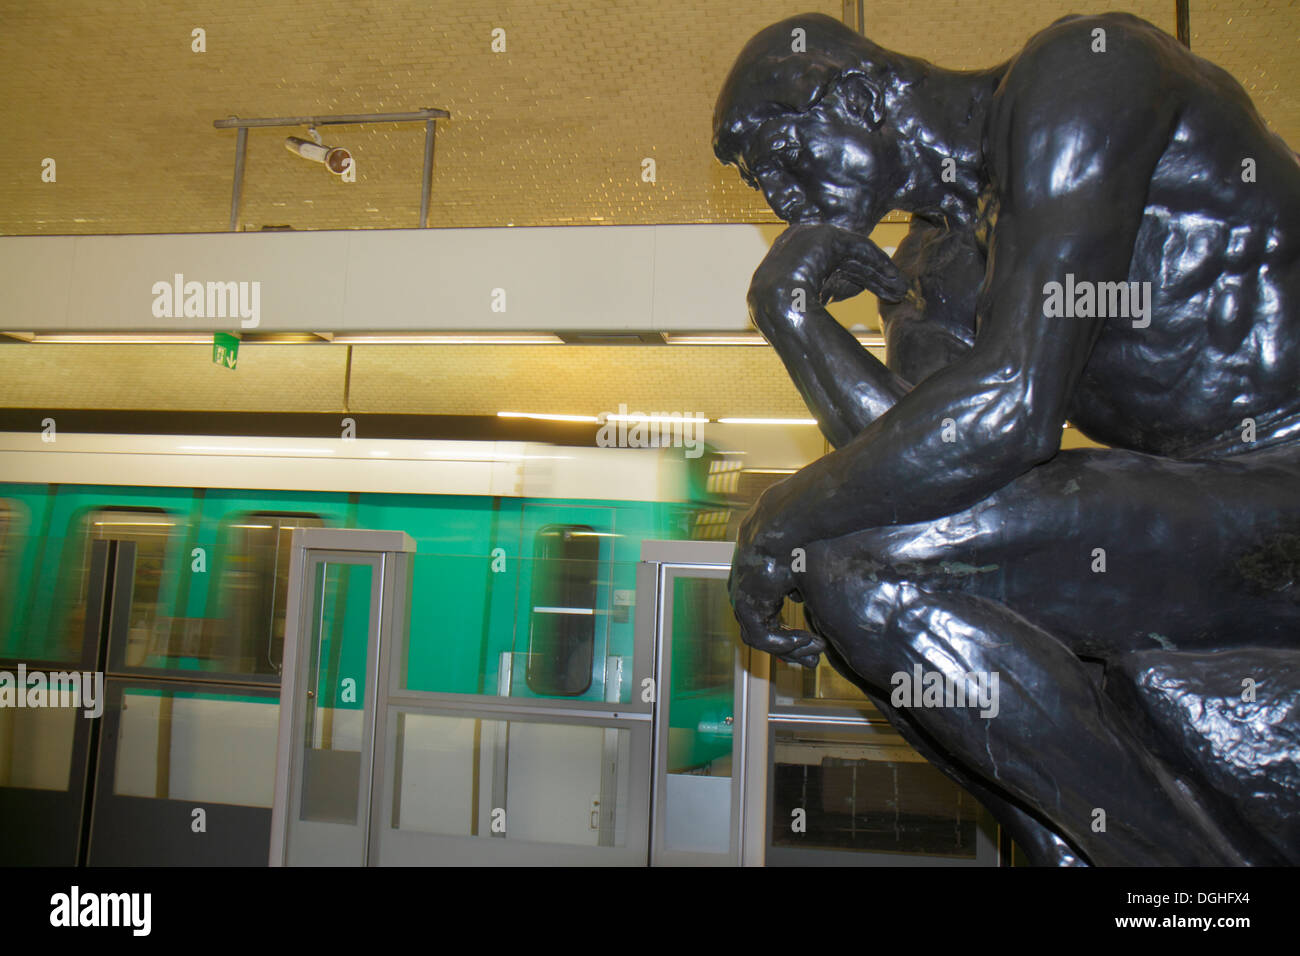 Paris France,7th arrondissement,Varenne Metro Station Line 13,subway,train,platform,Rodin,The Thinker,train,art,sculpture,France130818043 Stock Photo